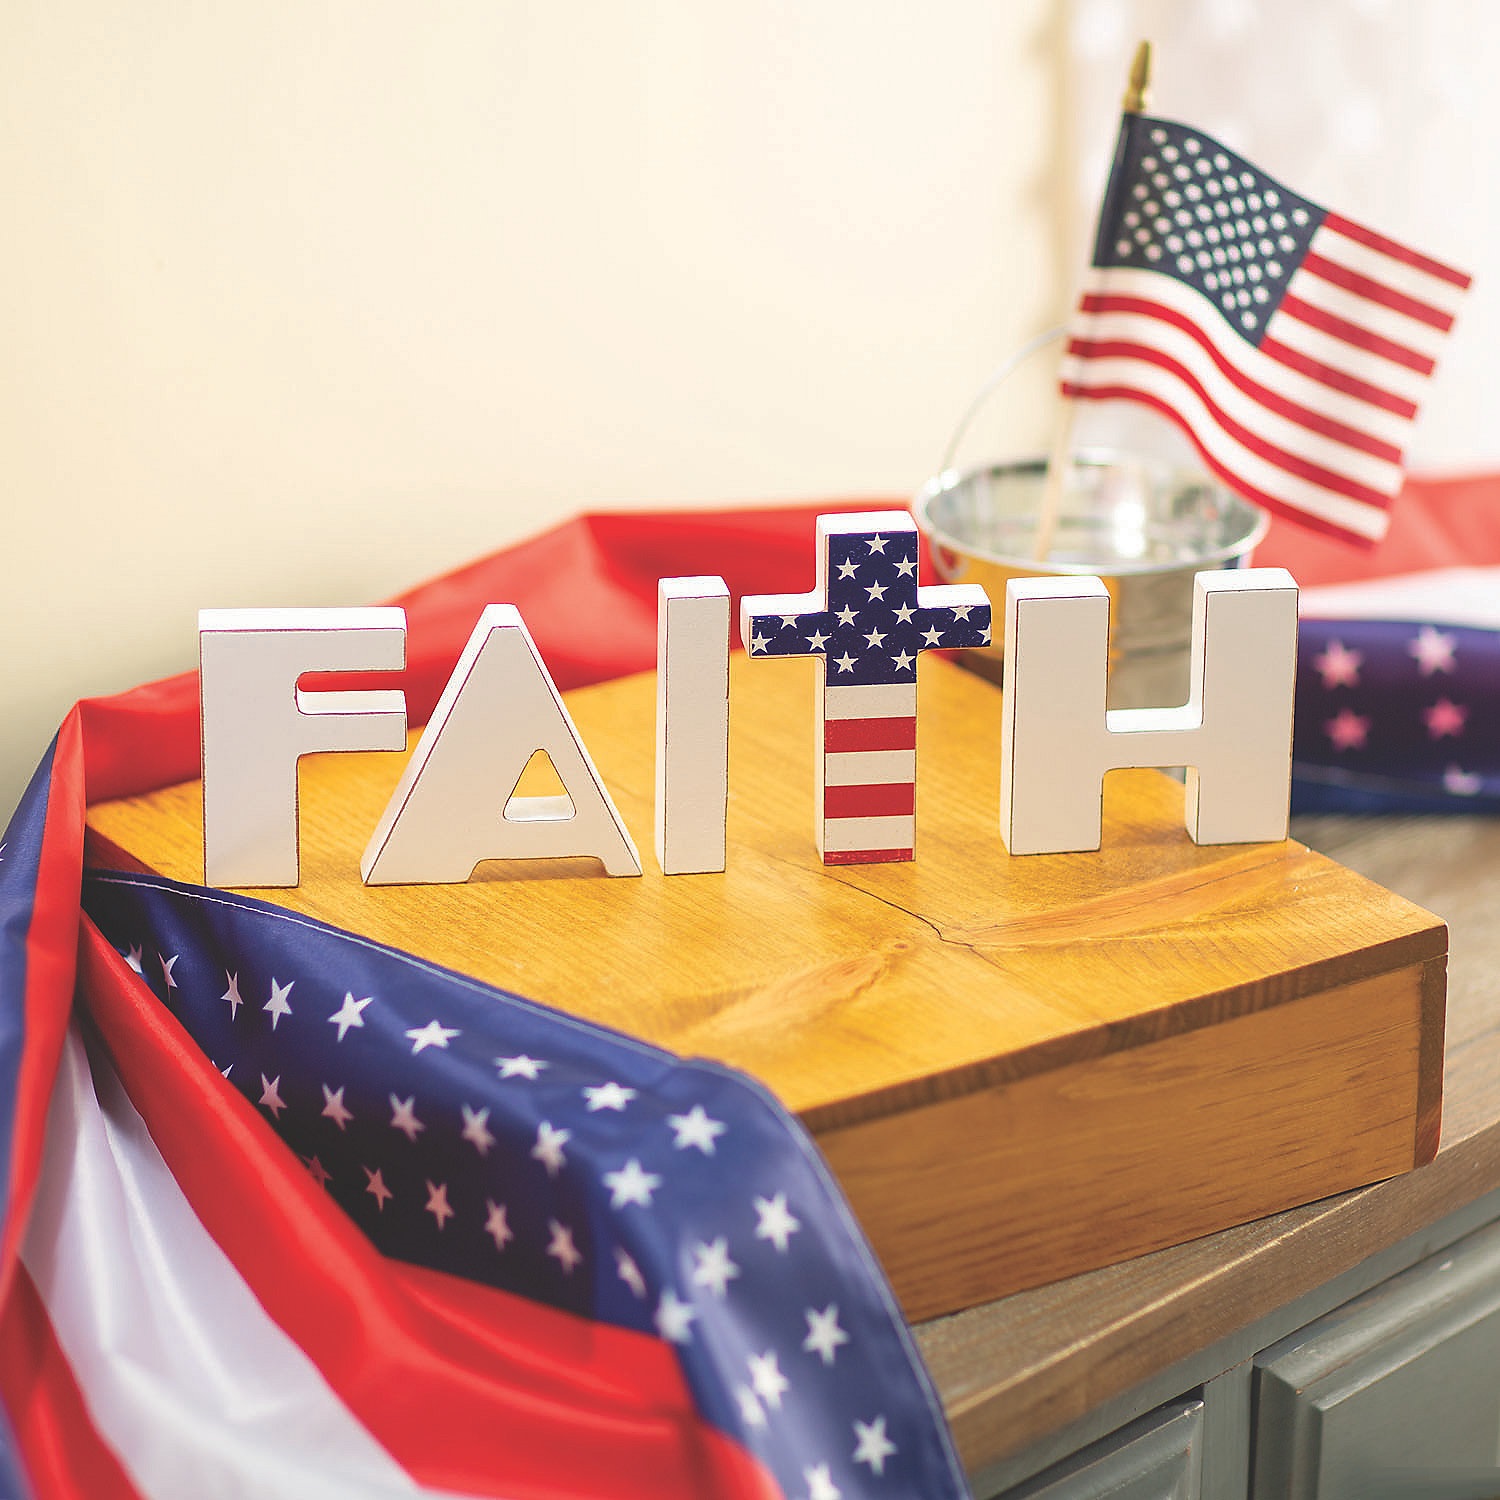 interchangeable-faith-tabletop-decoration-set_13845449-a01